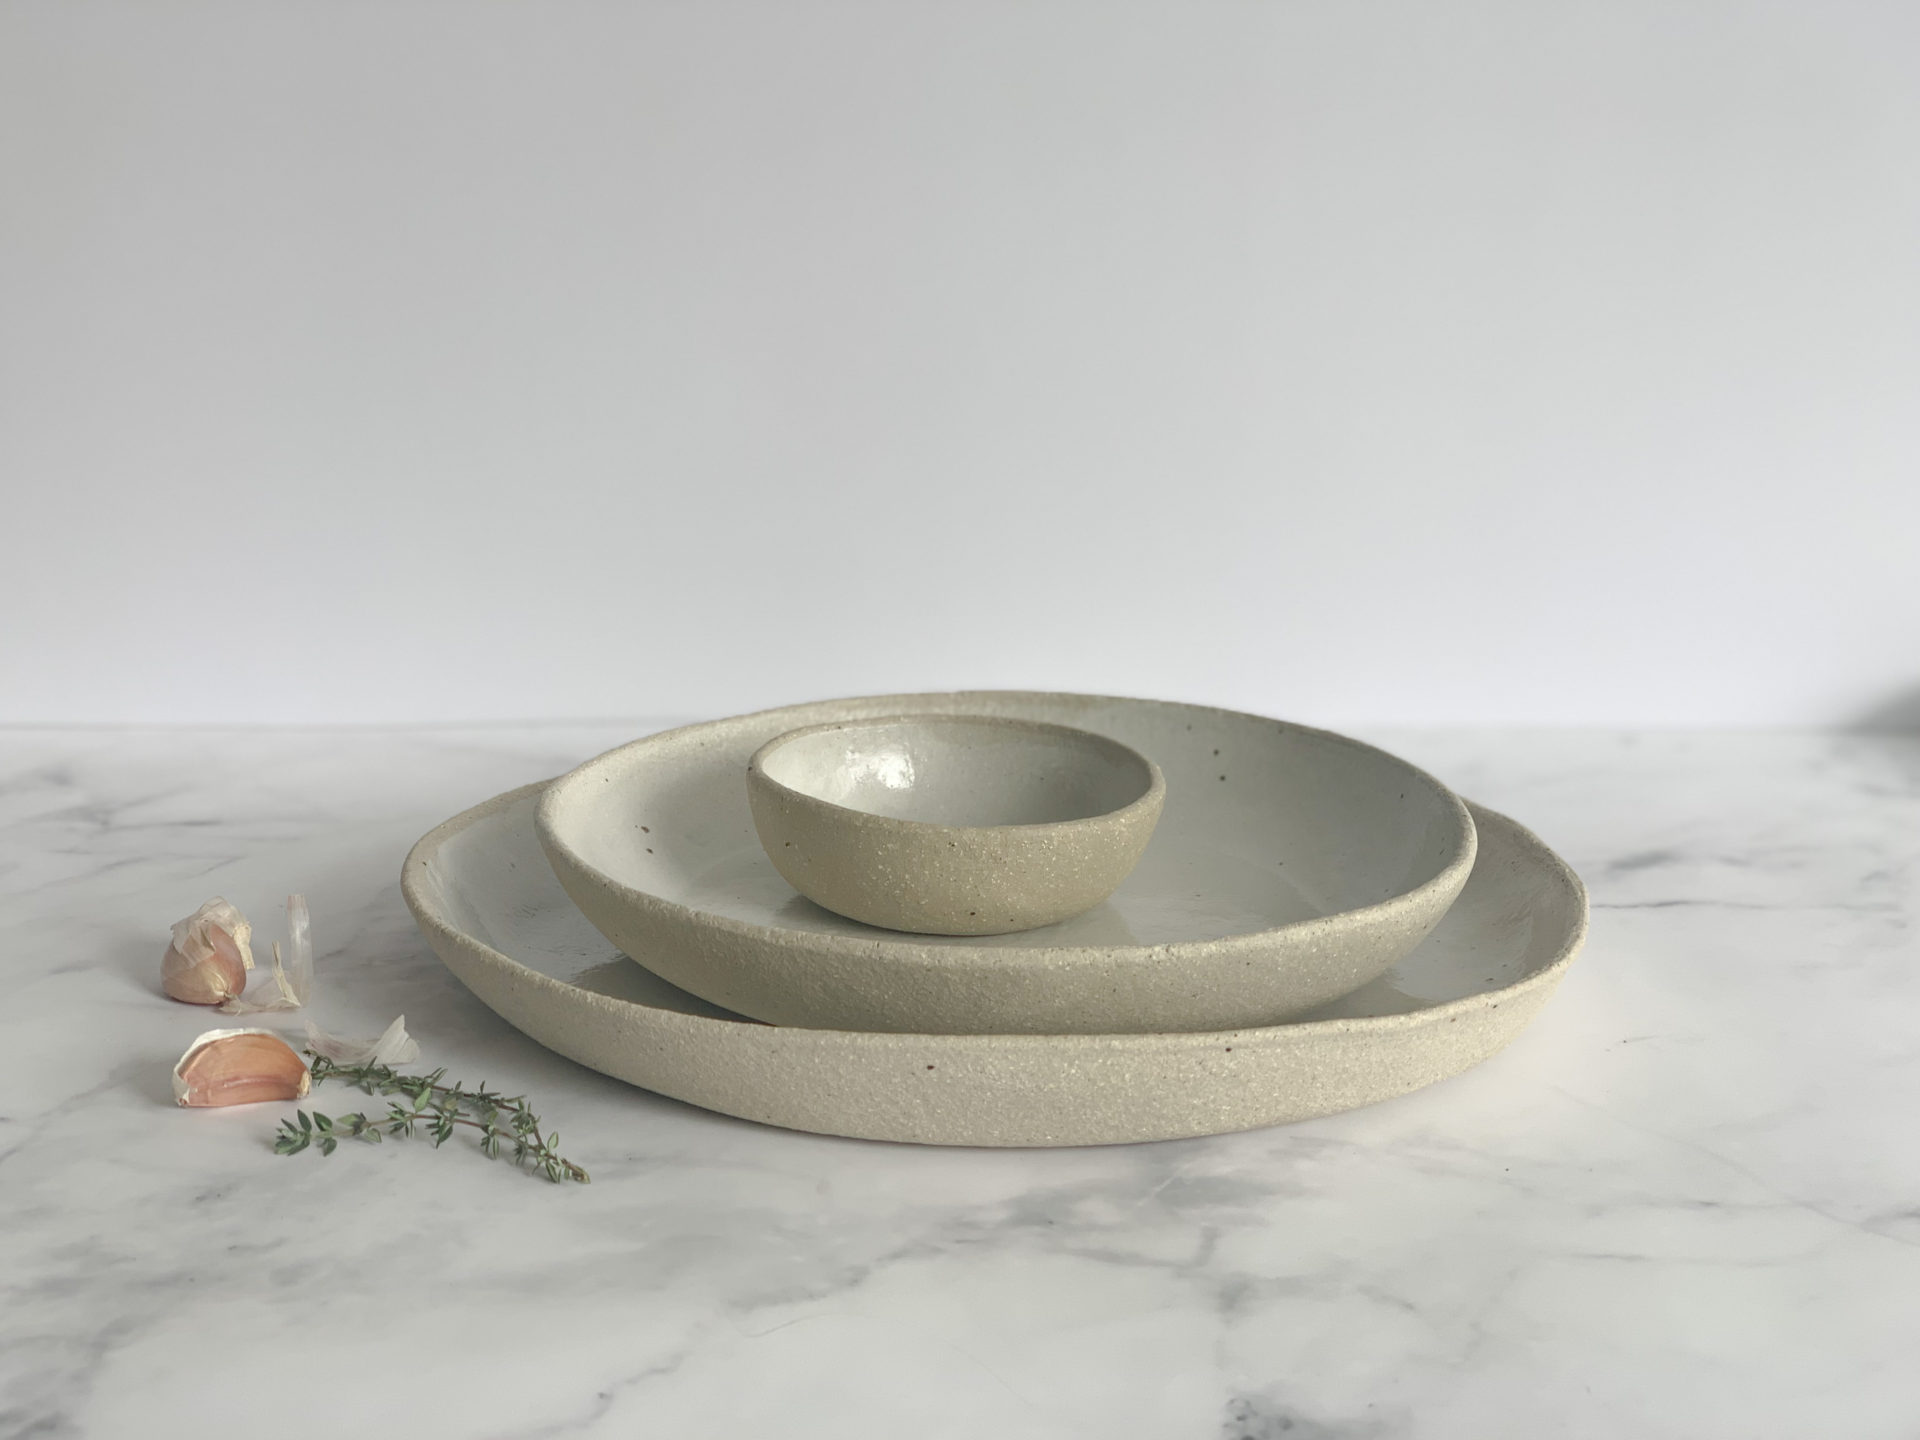 Handmade ceramic platters